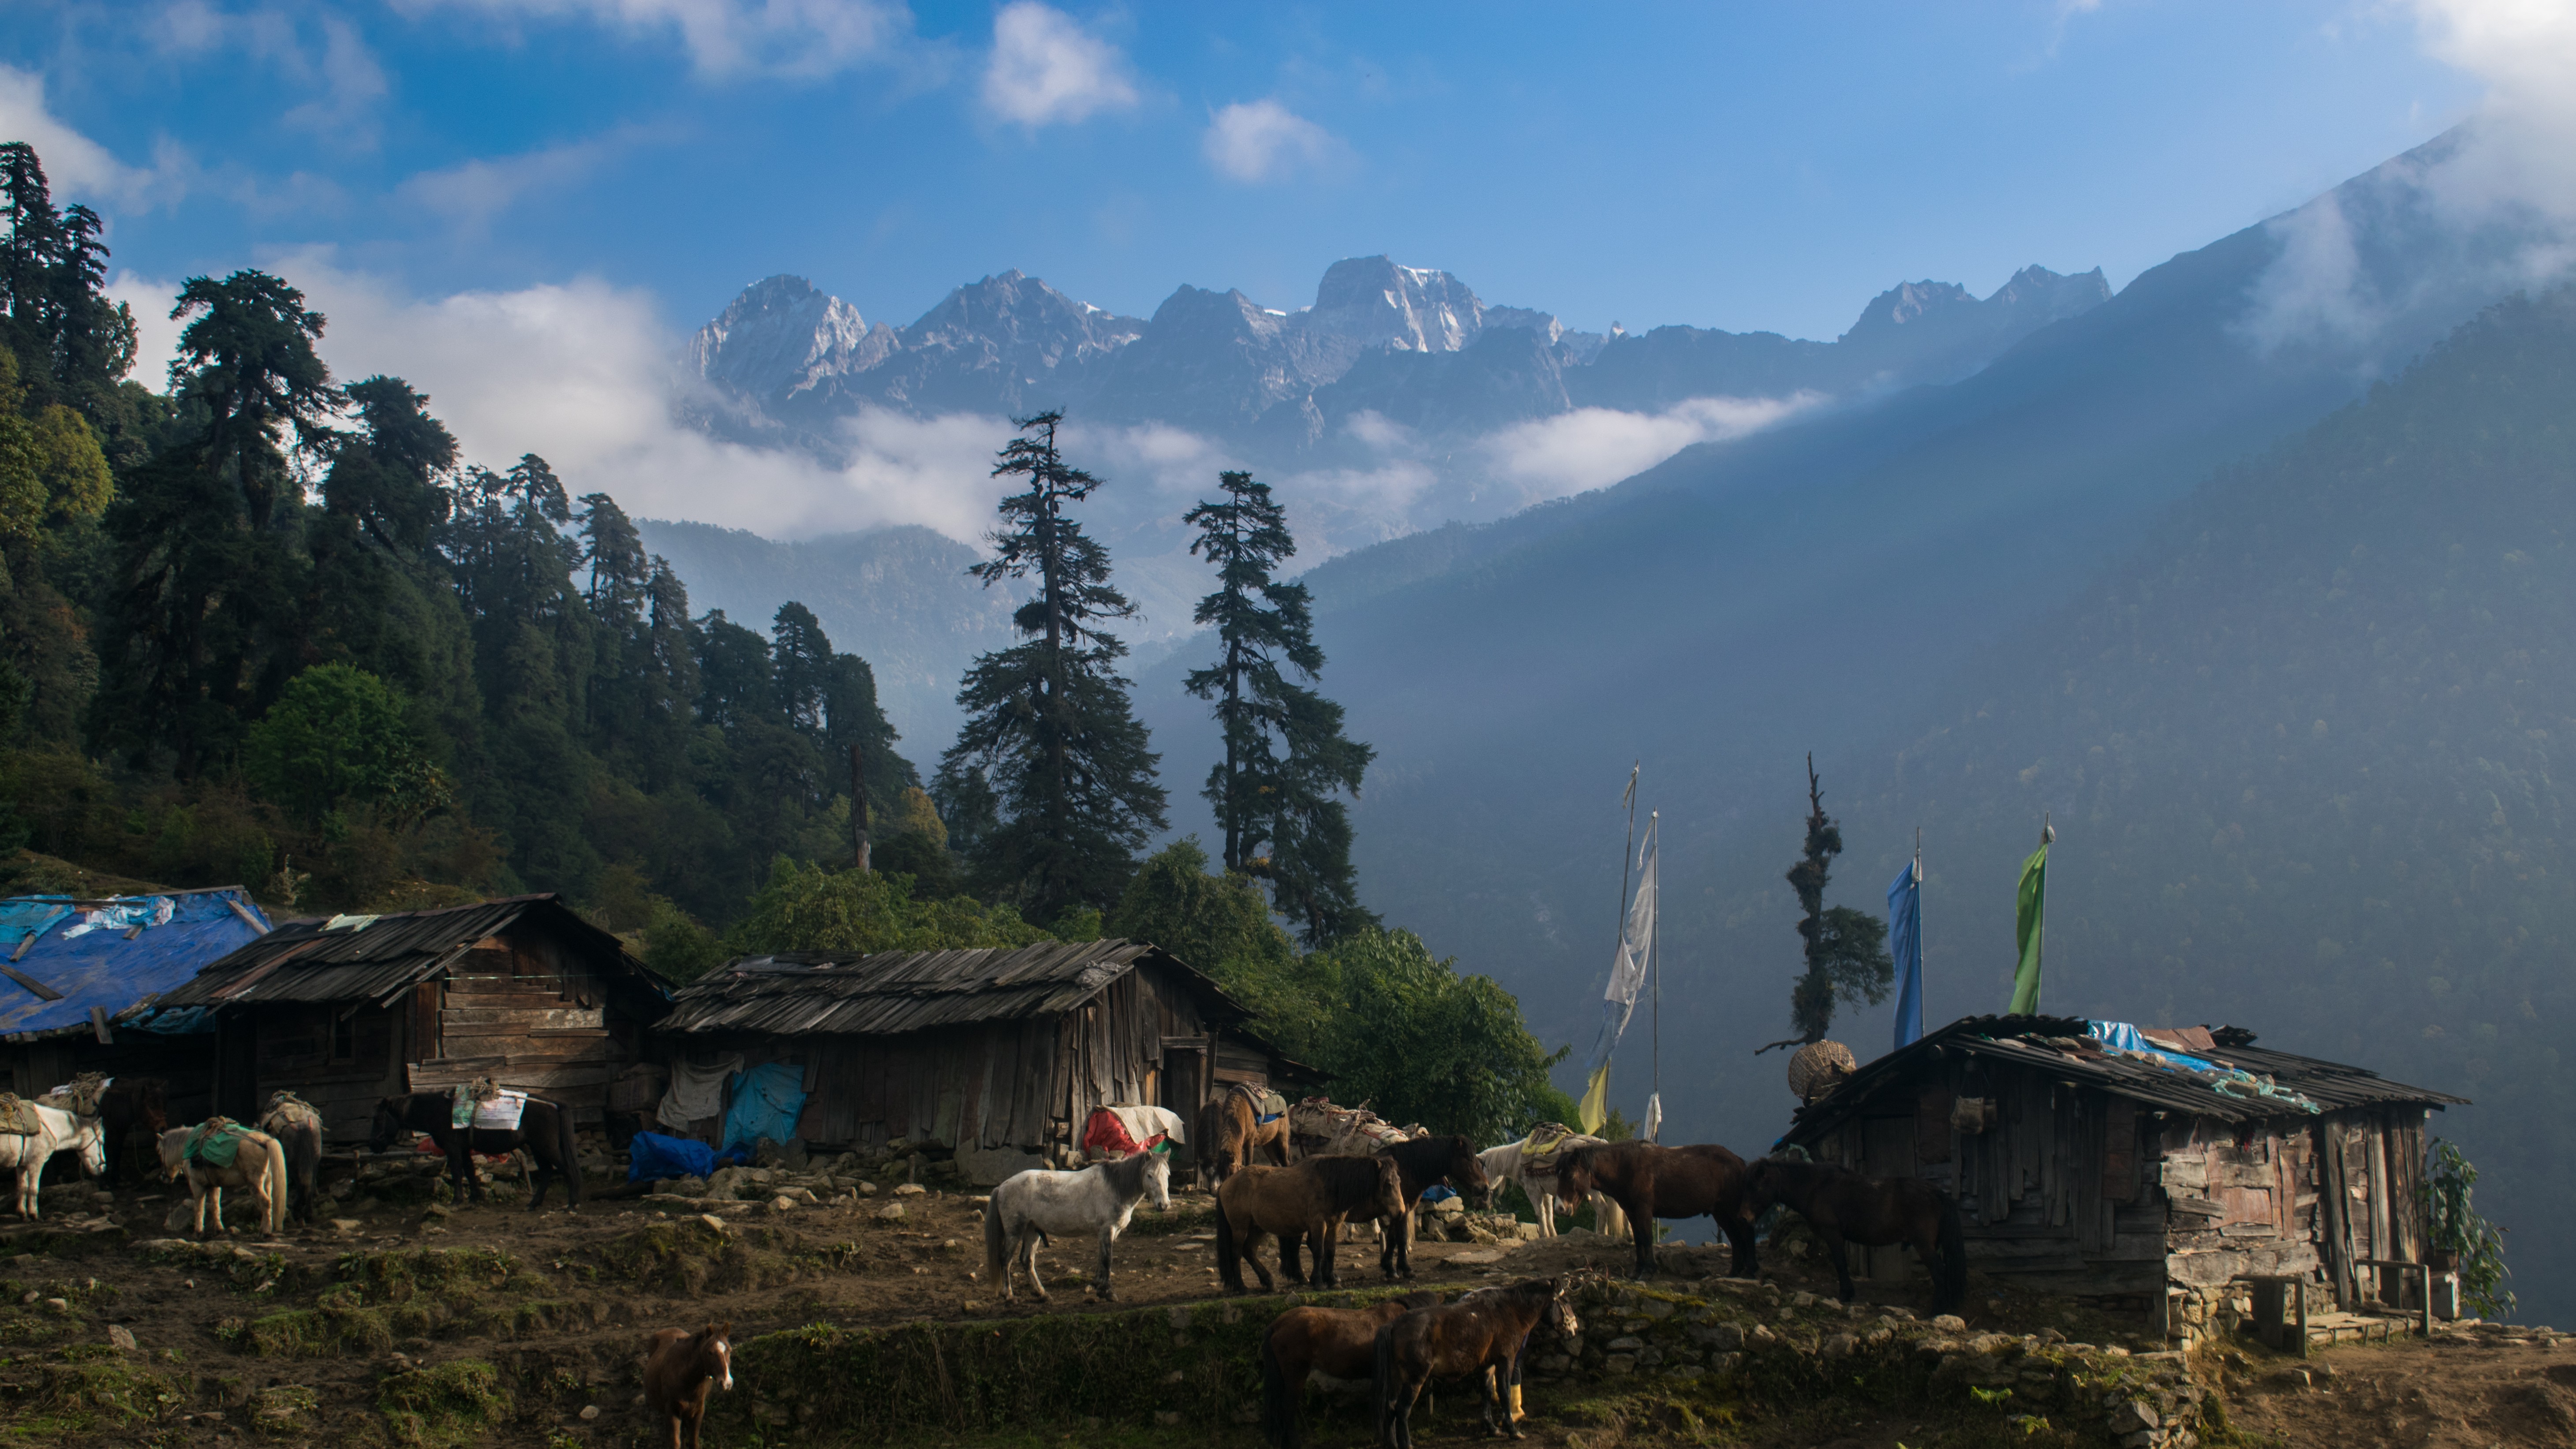 Kanchenjunga, India’s highest mountain. Photo: Shutterstock